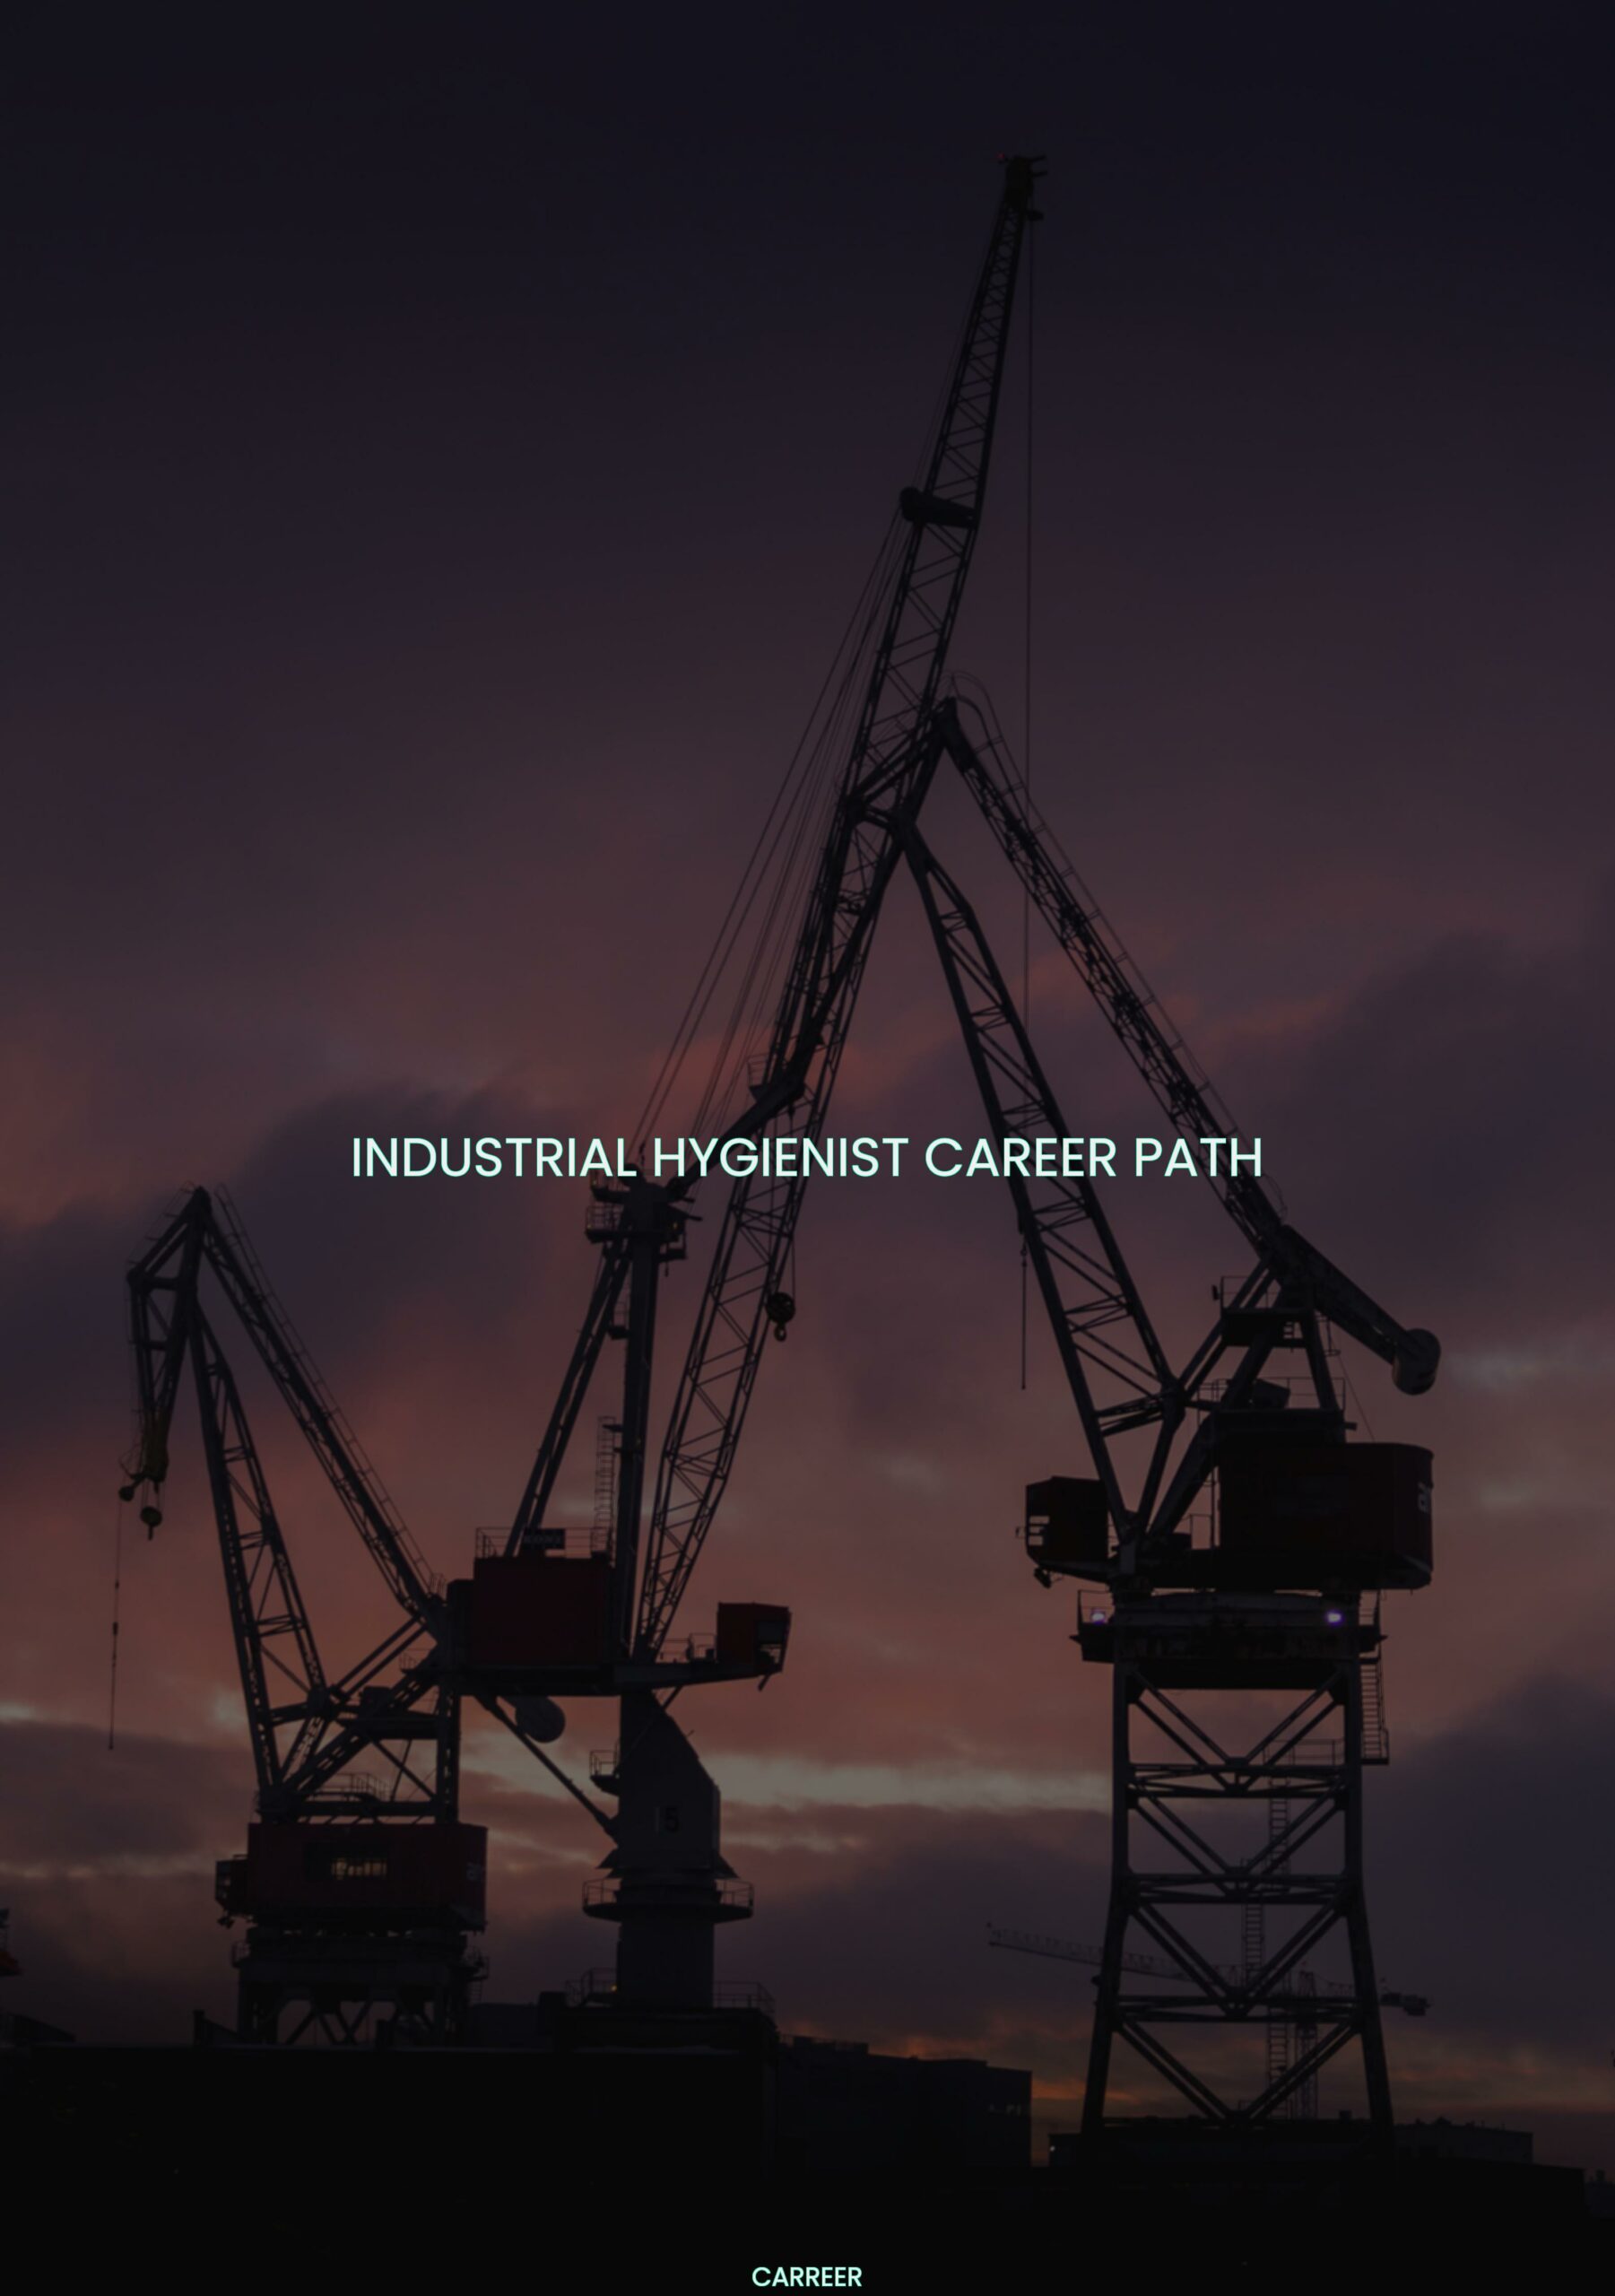 Industrial hygienist career path